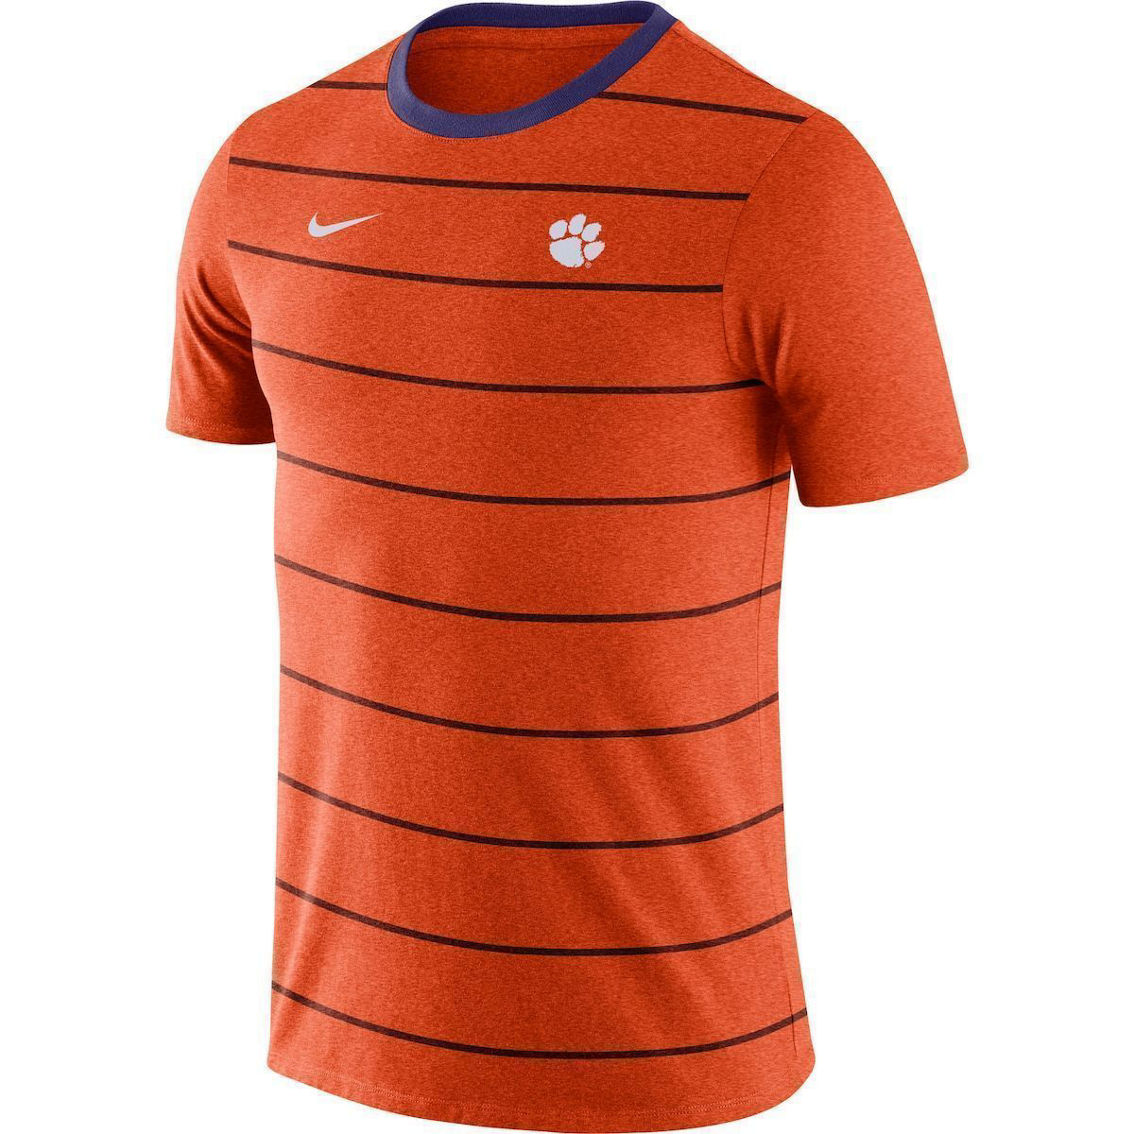 Men's Nike Orange Clemson Tigers Inspired Tri-Blend T-Shirt - Image 3 of 4